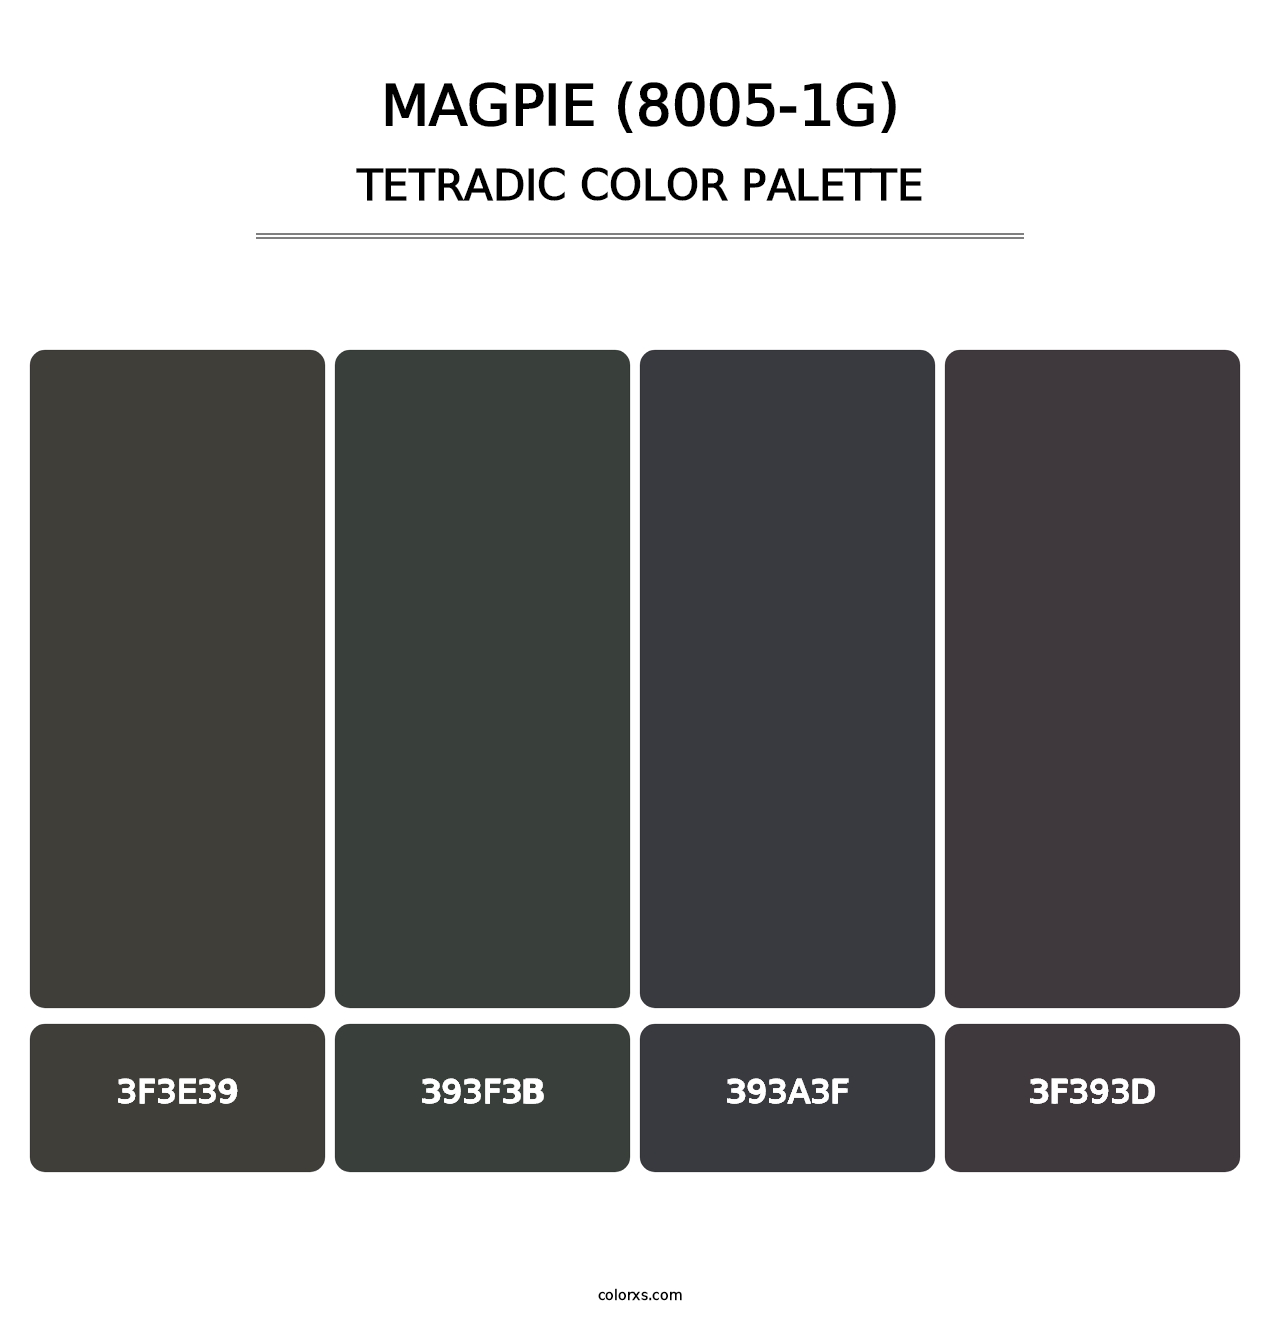 Magpie (8005-1G) - Tetradic Color Palette